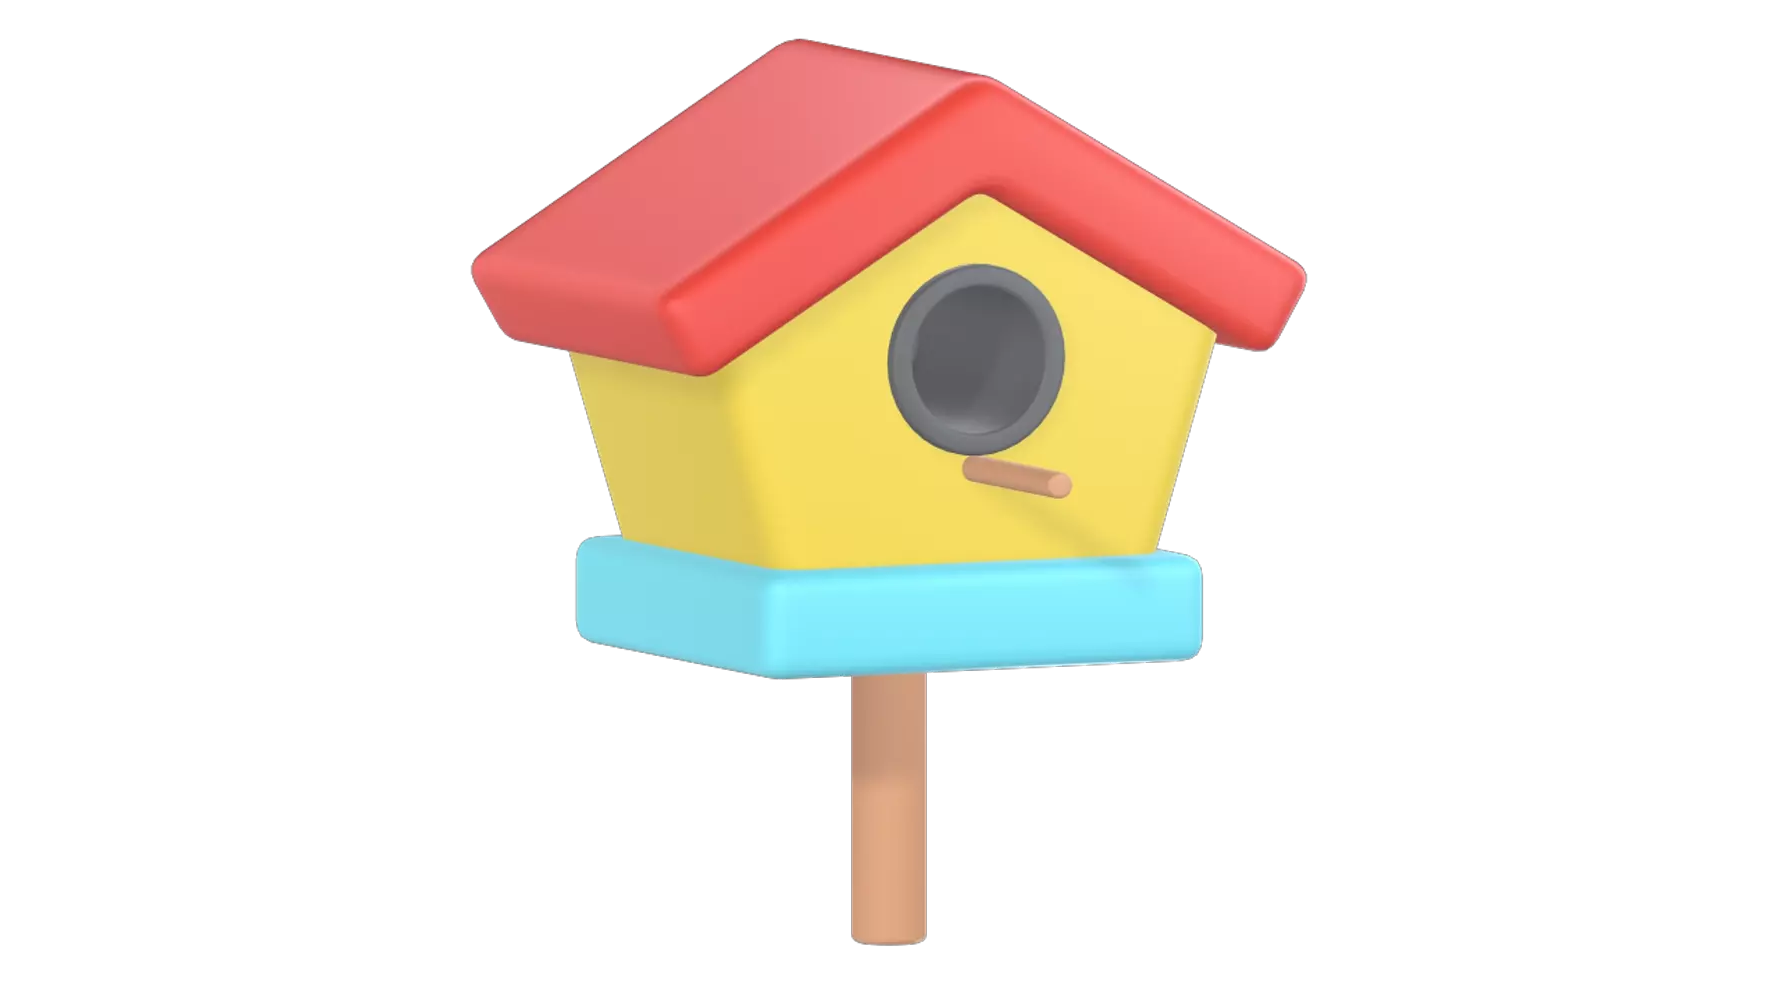 Bird House 3D Graphic